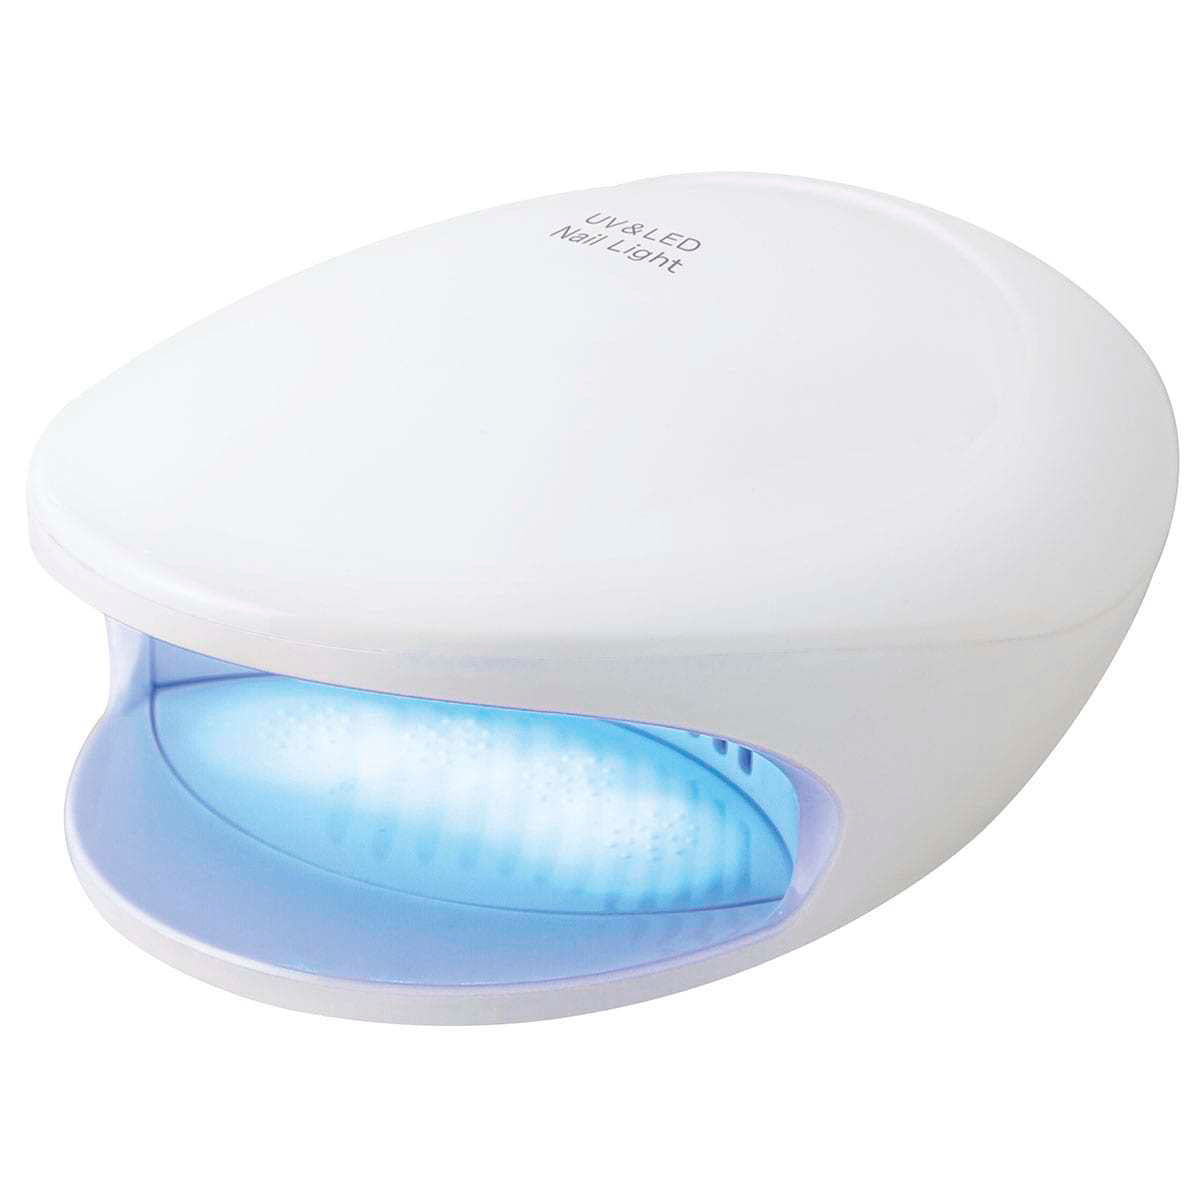 【家居】LED&UV雙模式美甲燈NR-1439